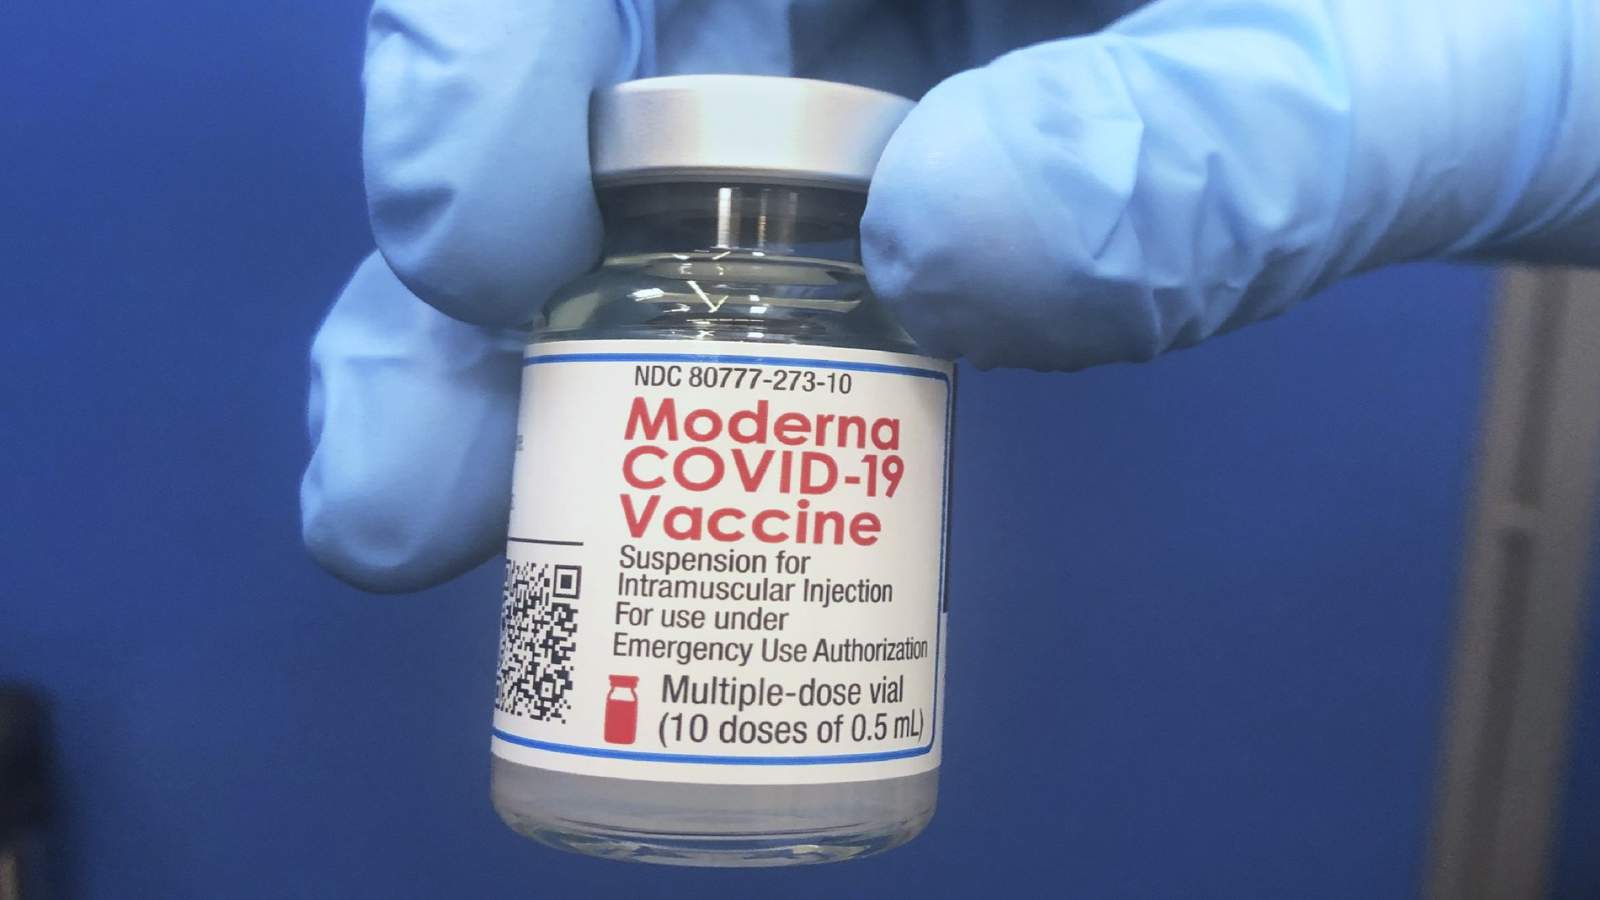 Severe weather delays coronavirus vaccine distribution in Virginia